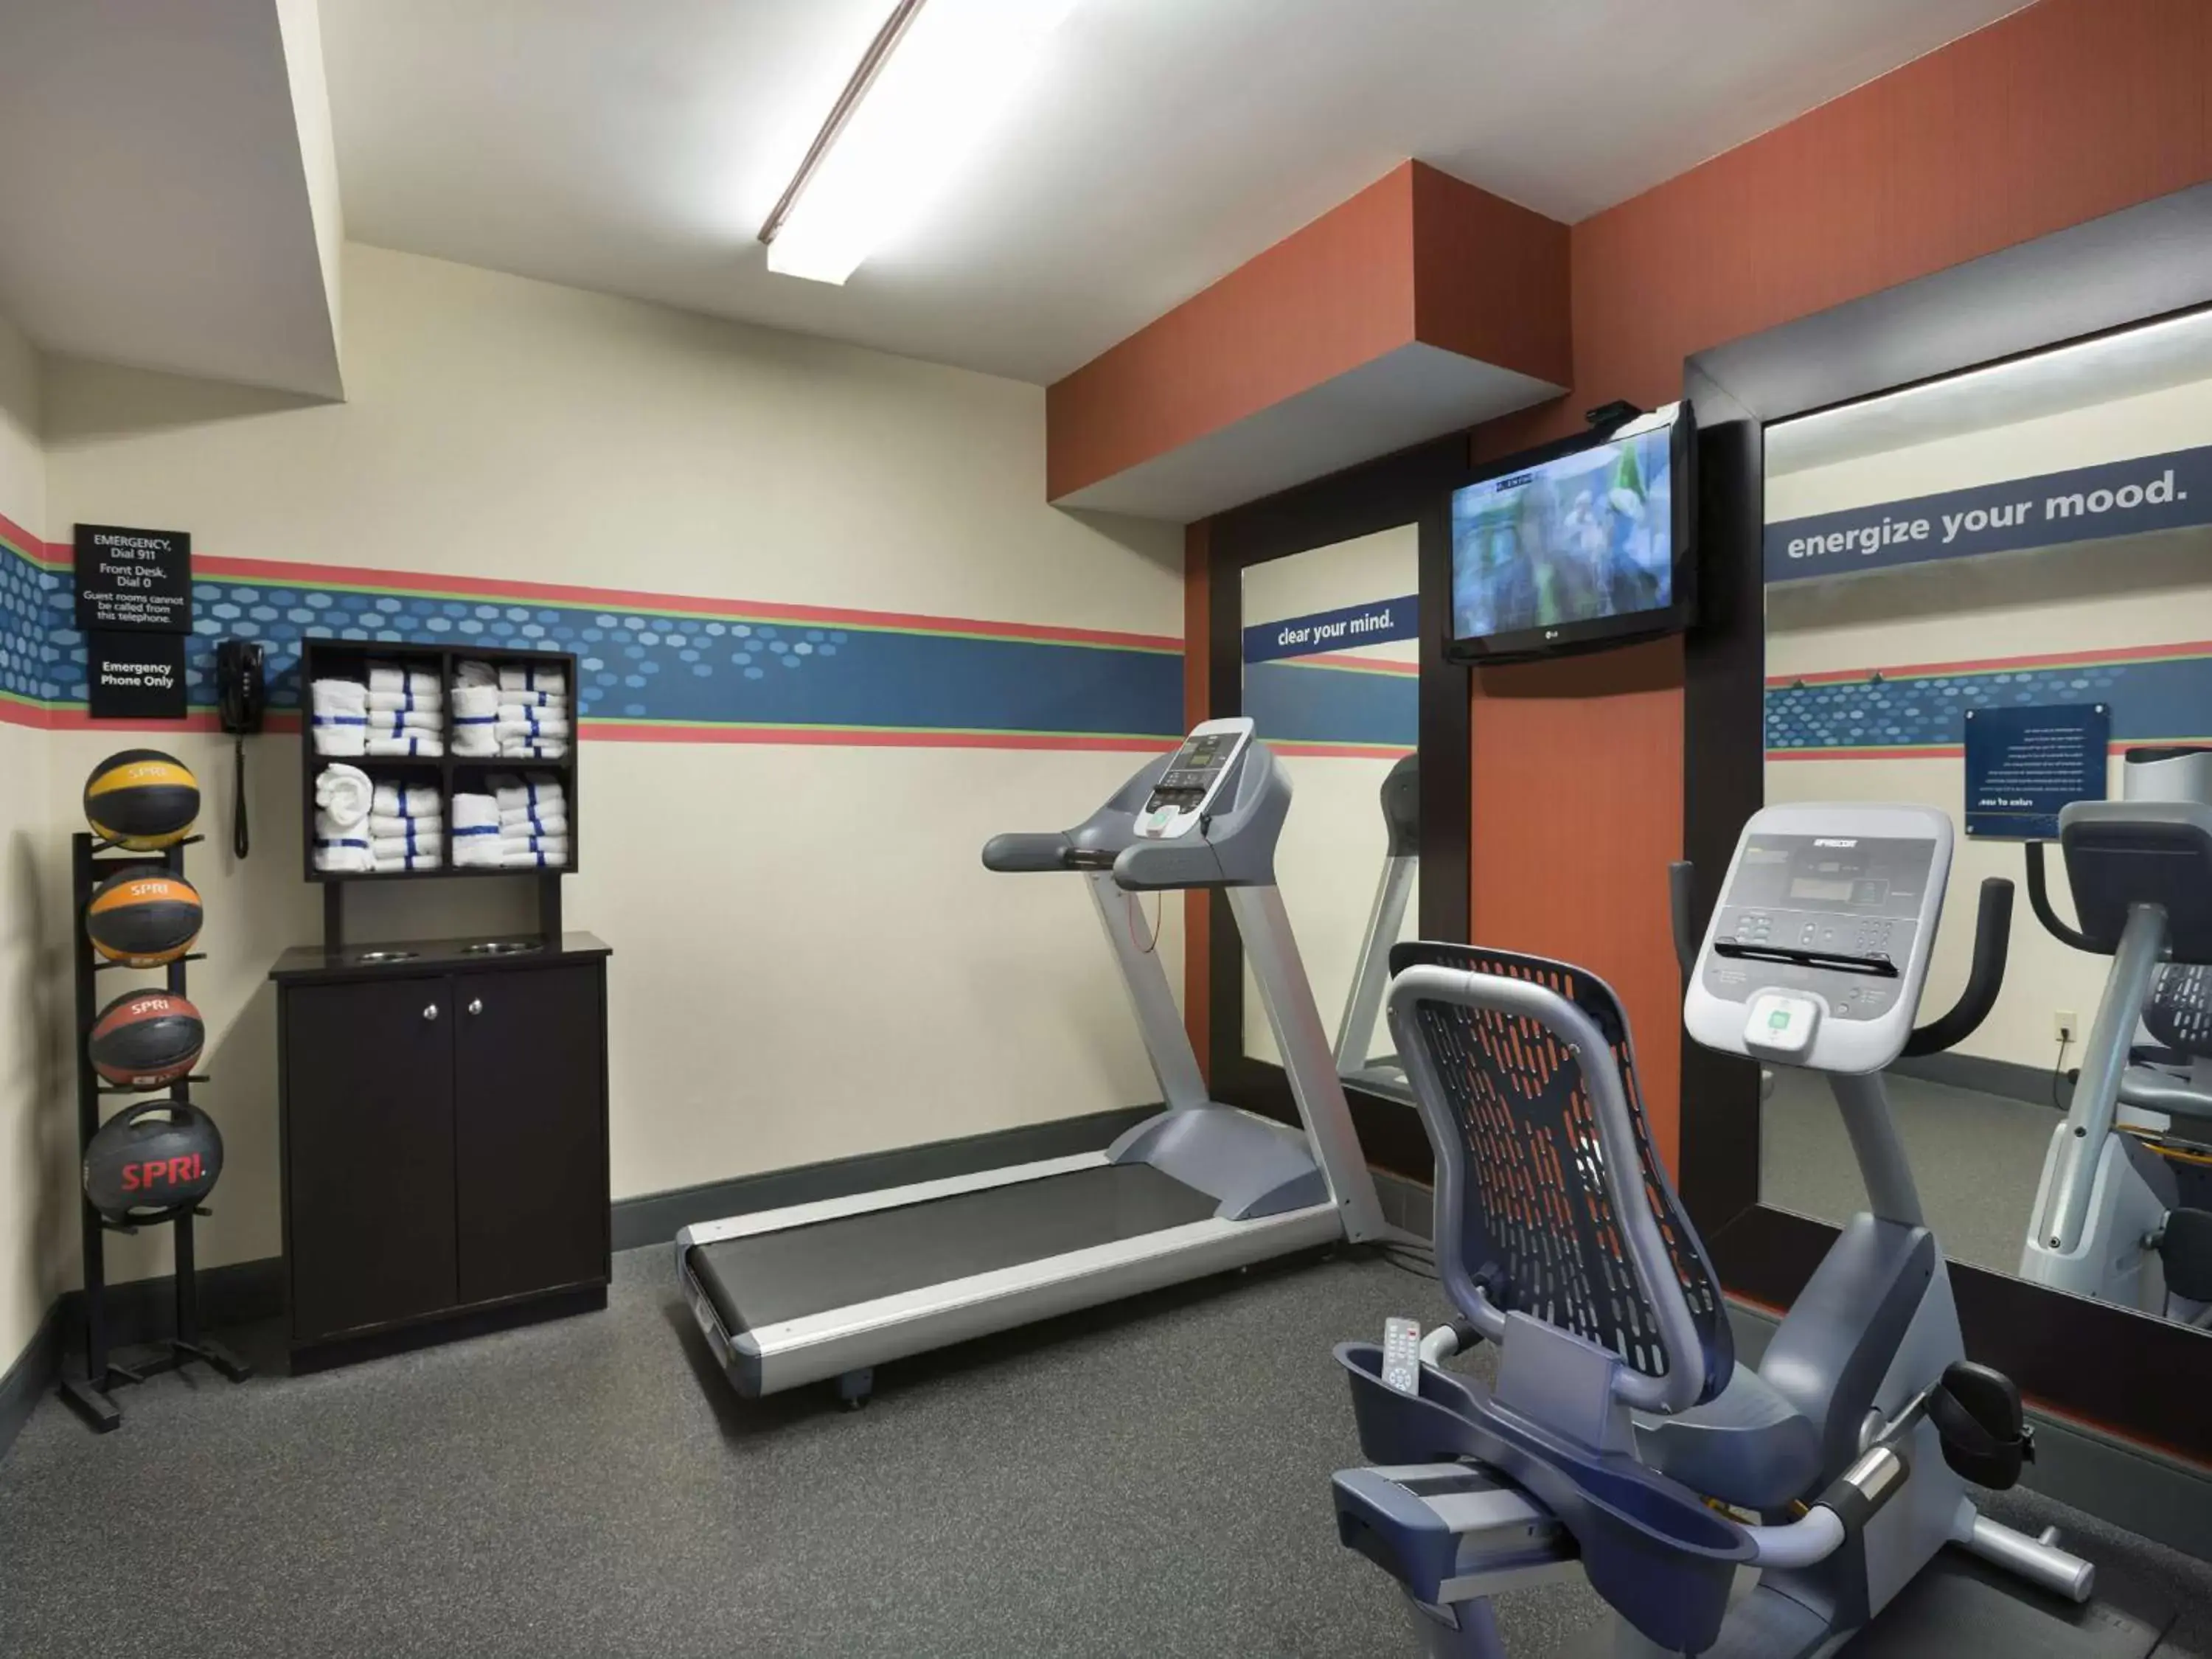 Fitness centre/facilities, Fitness Center/Facilities in Hampton Inn Helen